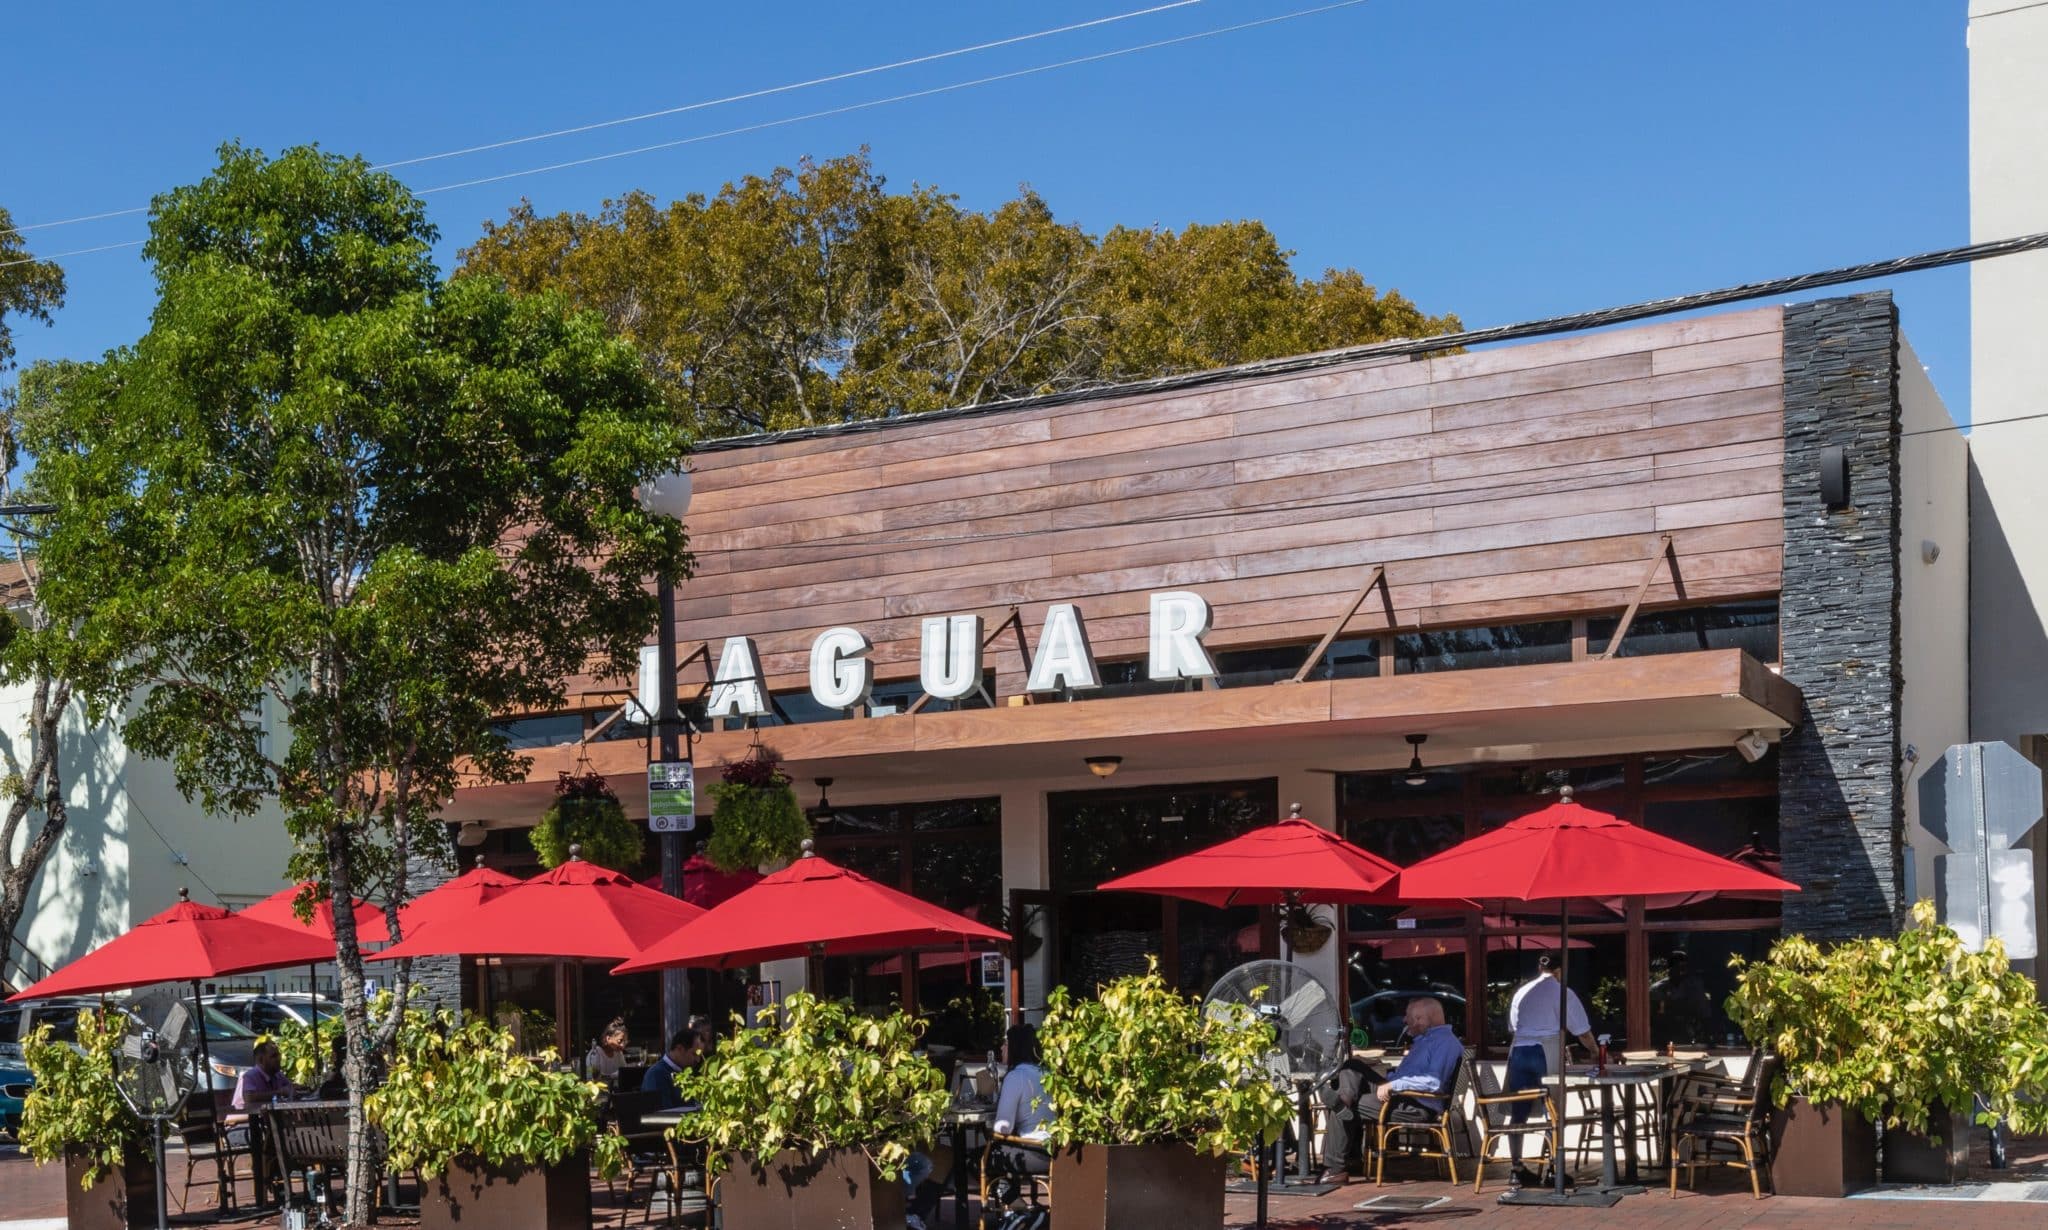 Jaguar Restaurant exterior